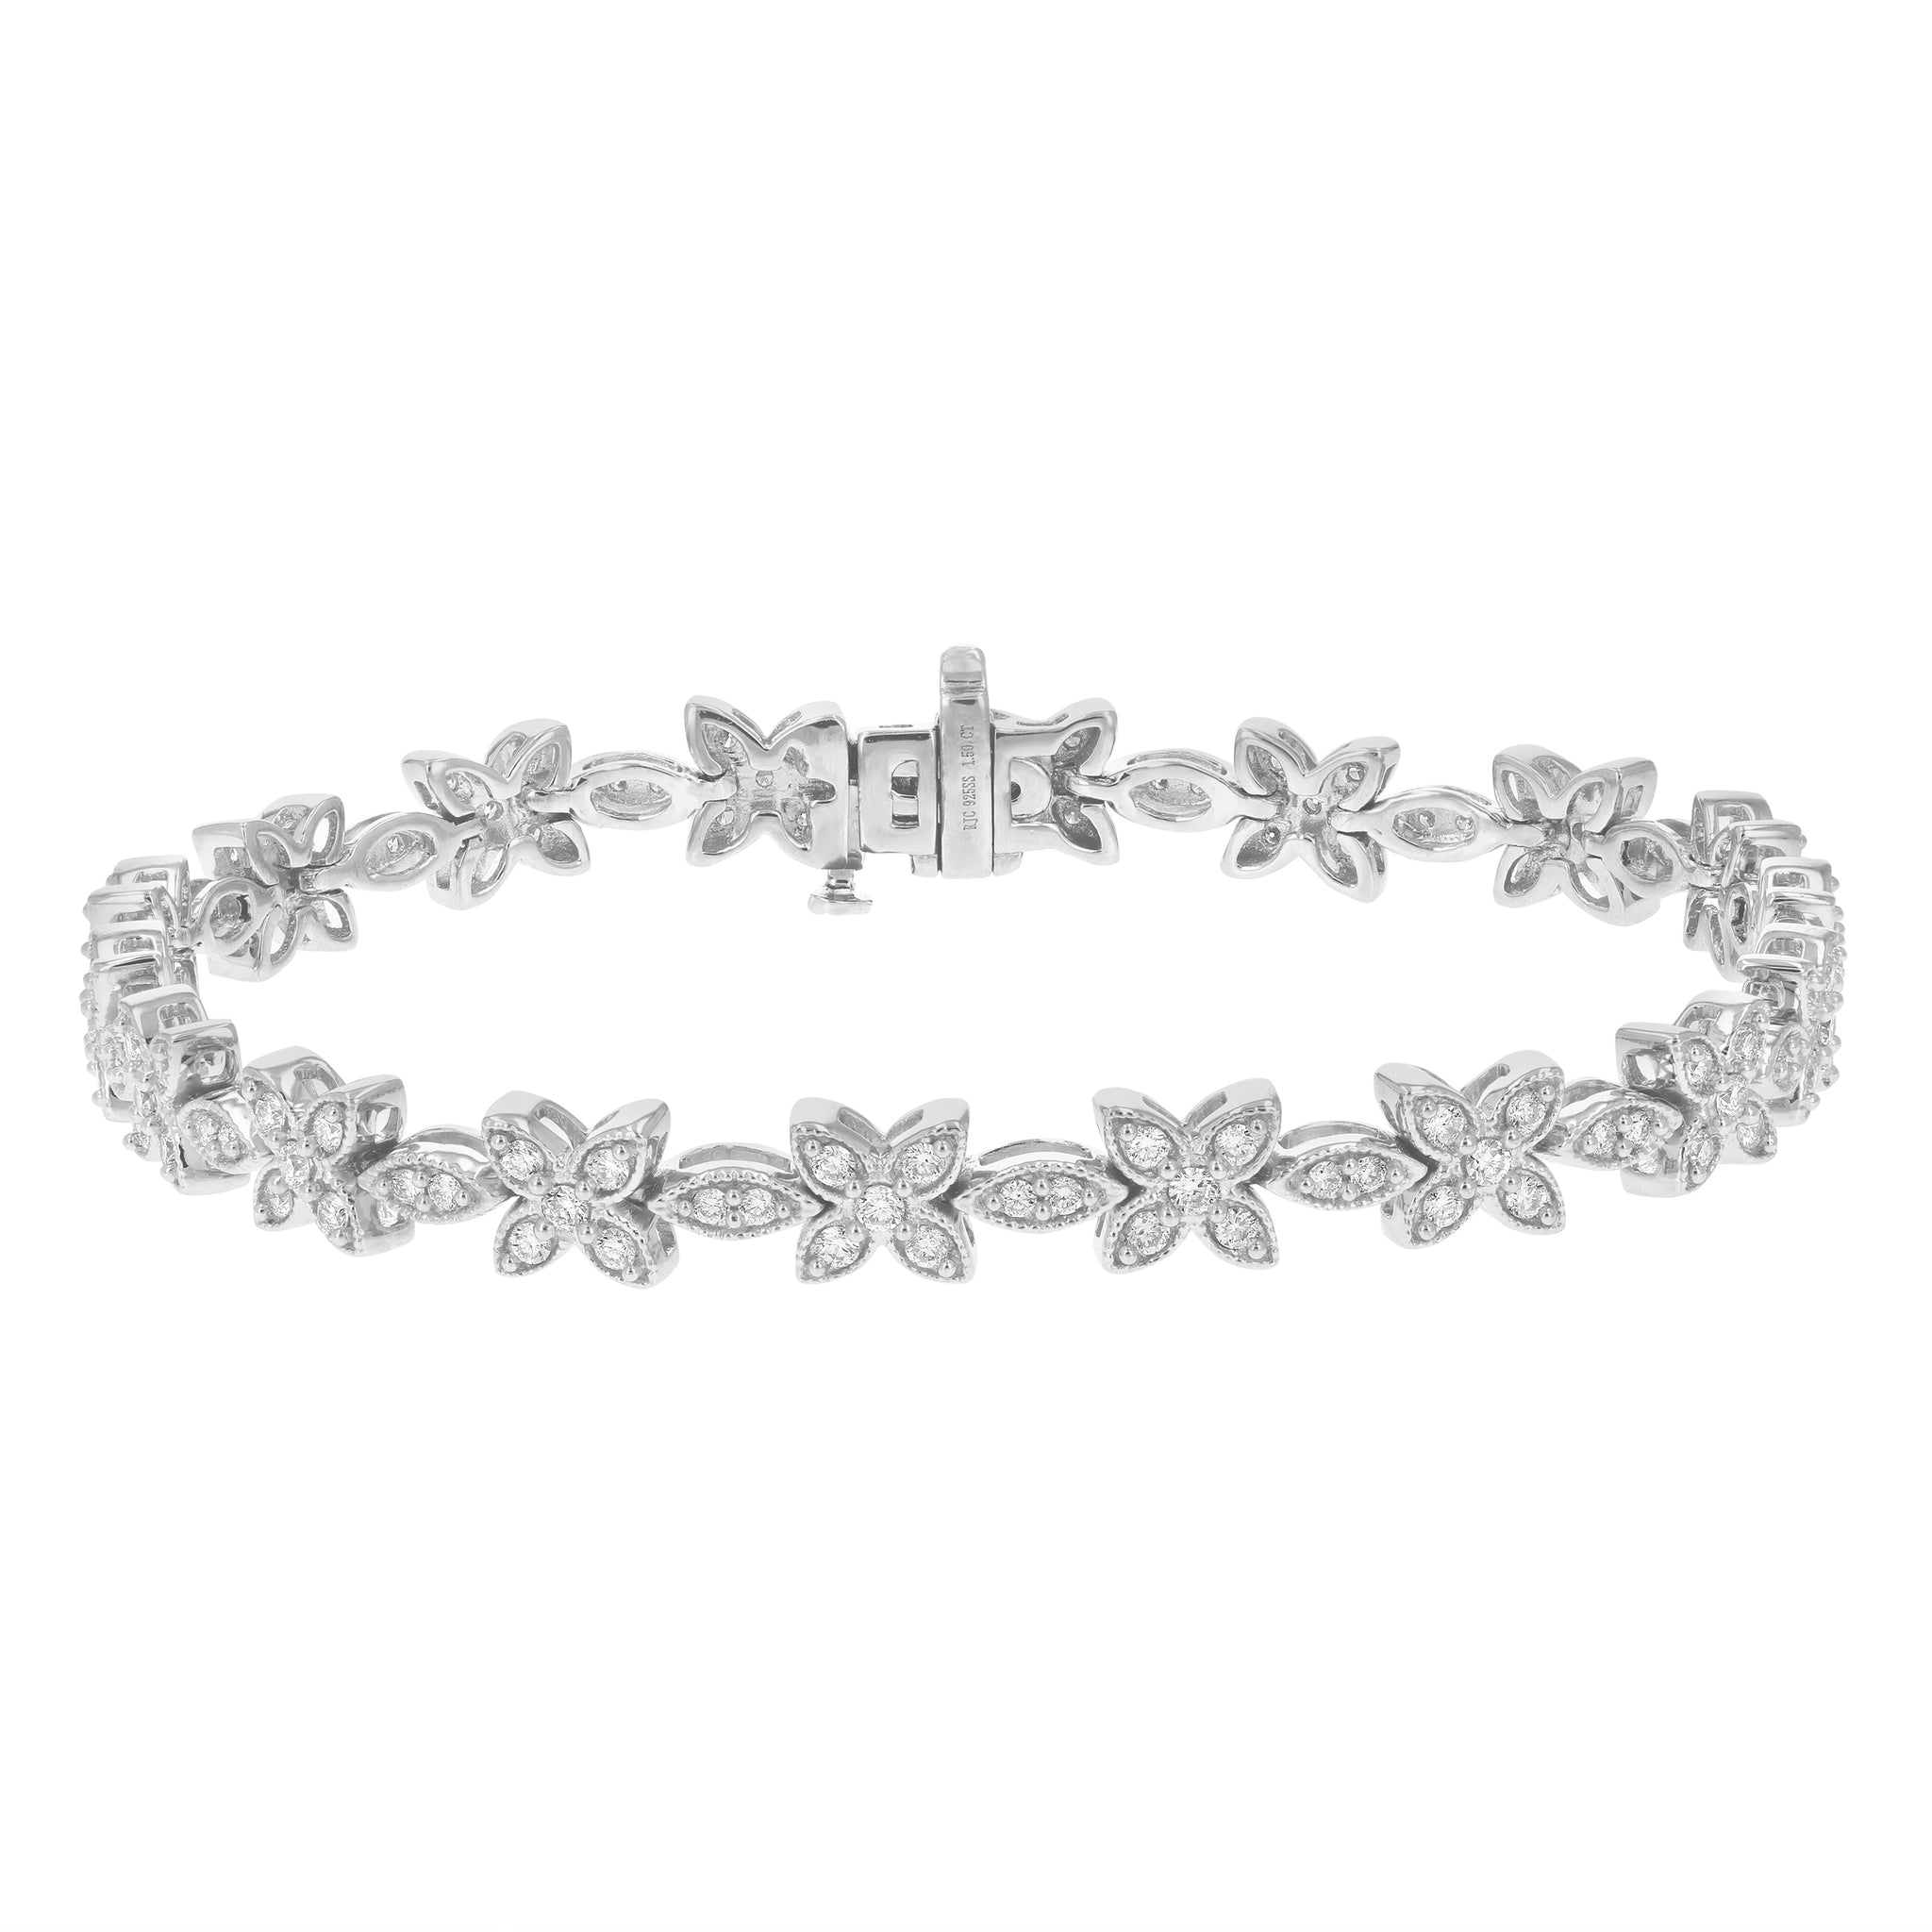 SOLID 925 Sterling Silver Baguette Tennis Bracelet ICED Diamond Necklace  Hip Hop